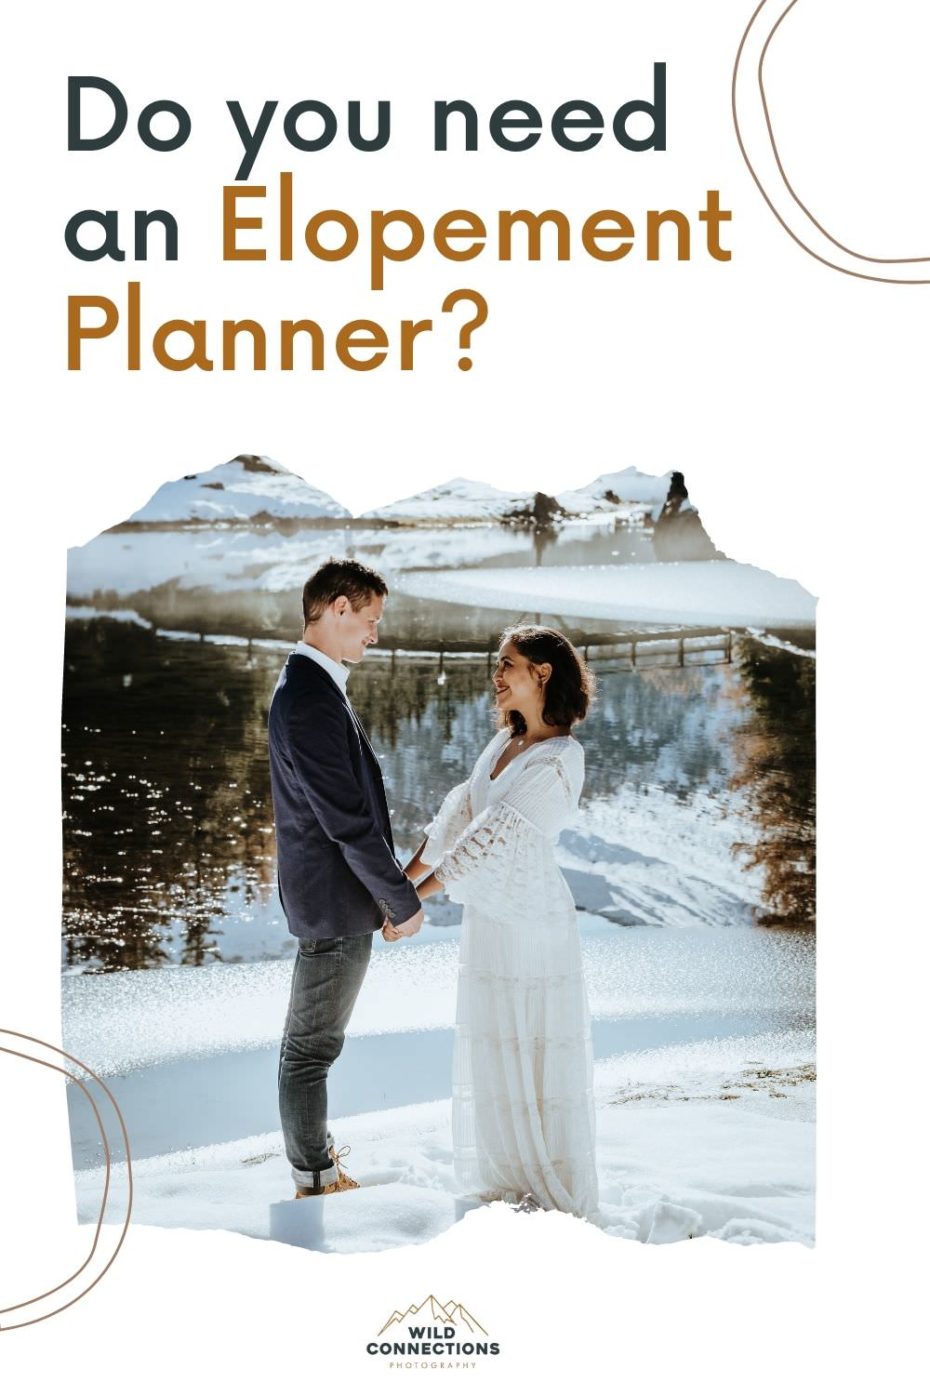 Do you need an elopement planner?